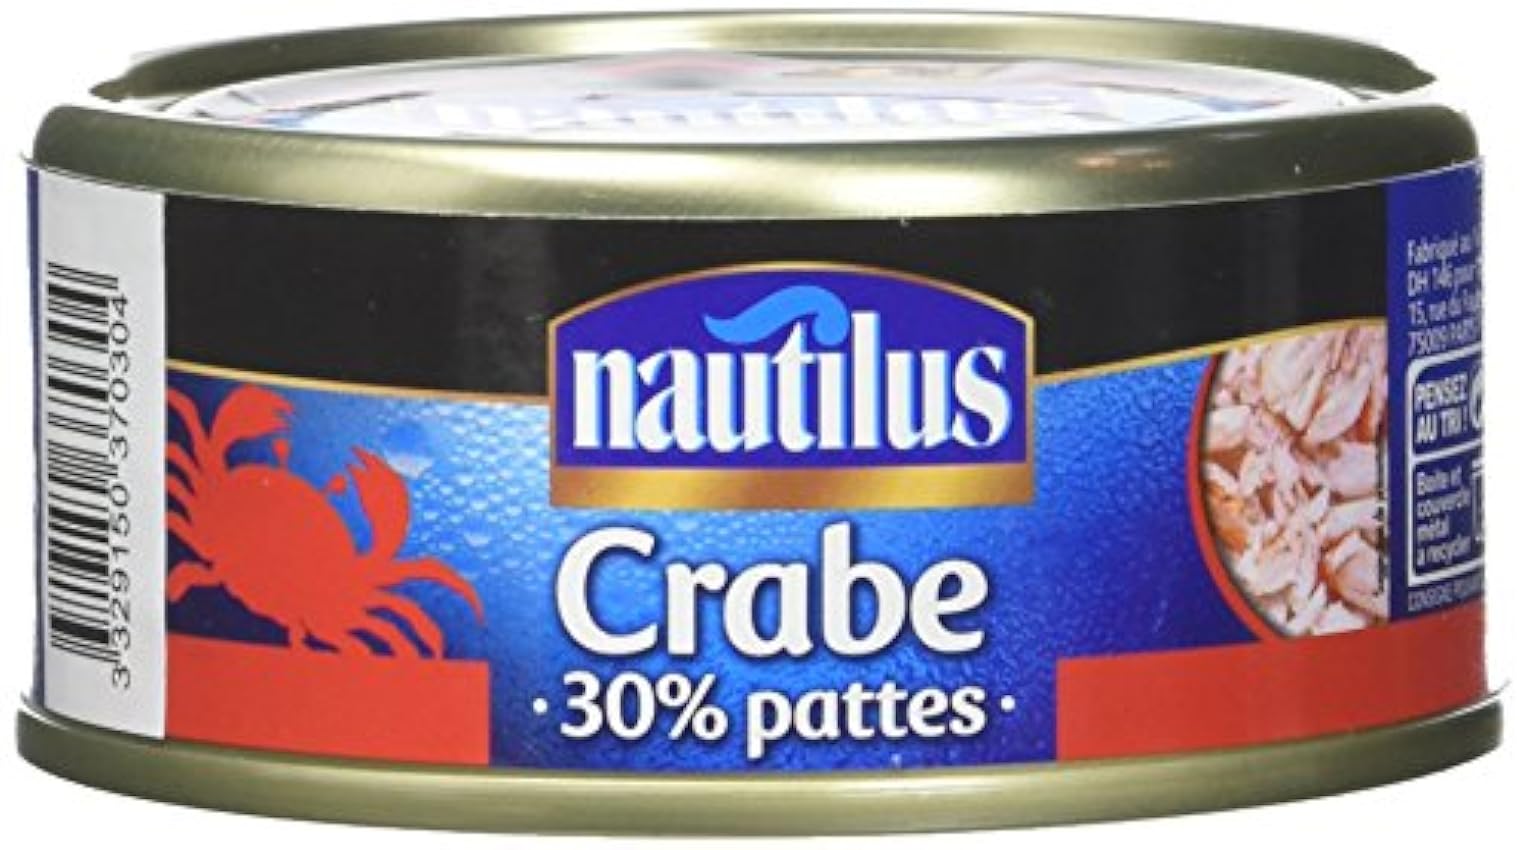 Nautilus Crabe Chair 30% Pattes, 8 x 145g nLgqhZPg